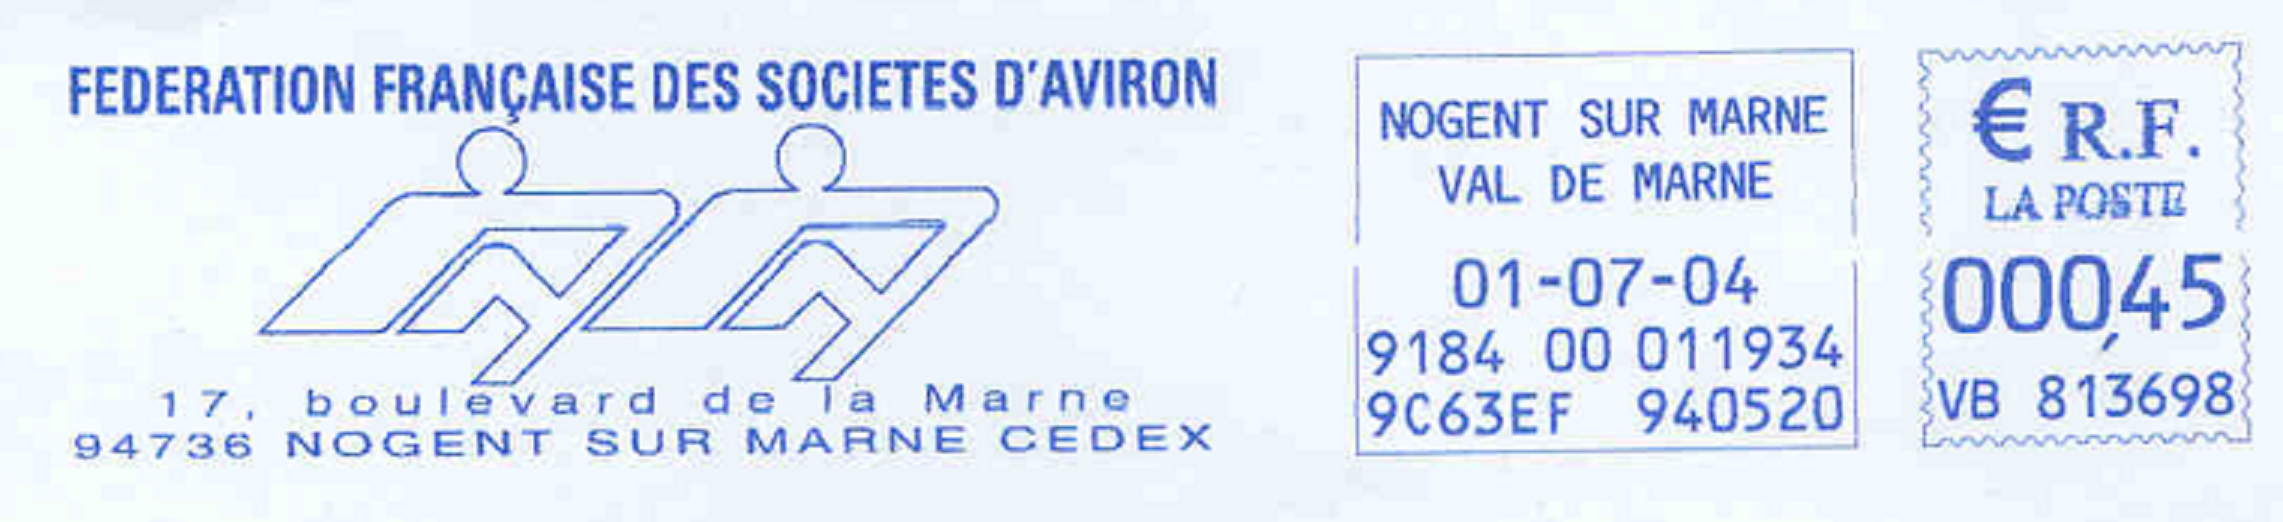 PM FRA 2004 Federation Francaise des Sociétes dAviron Blue meter mark with pictogram